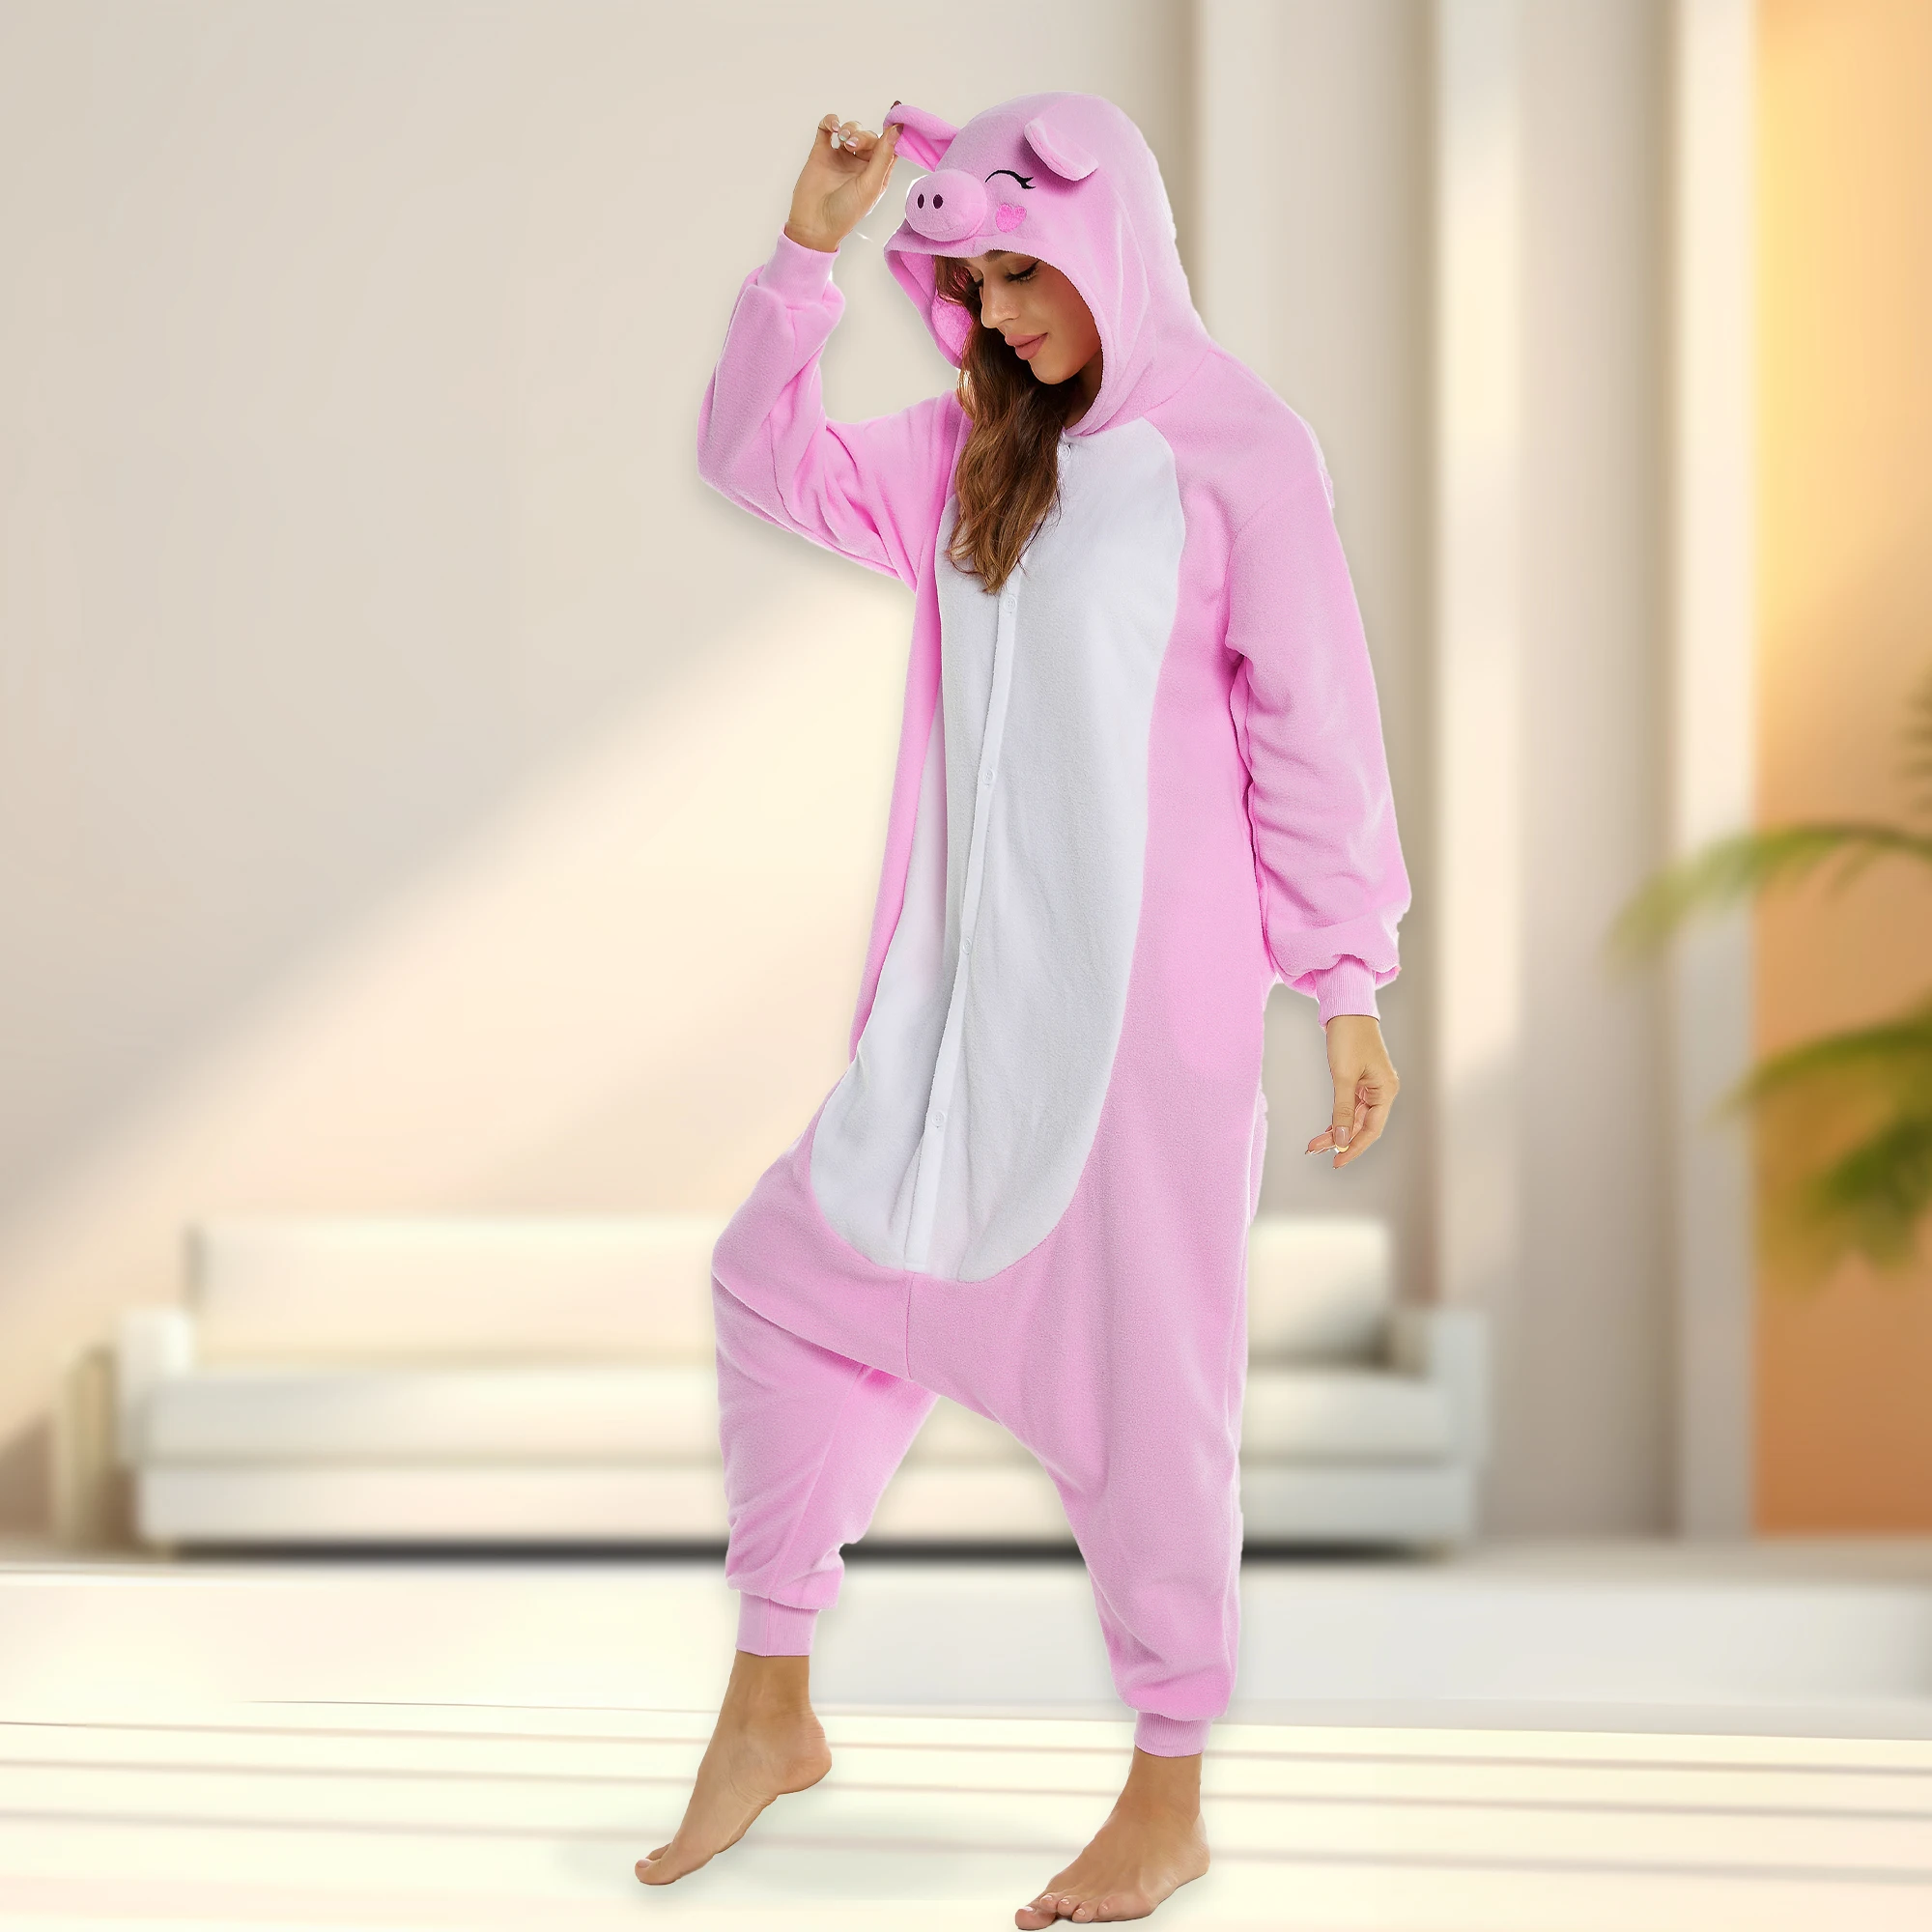 

CANASOUR Pink Pig Costumes One-Piece Pajamas Adults Women Onesie pyjamas Halloween Christmas Cosplay Wintern Soft Sleepwears